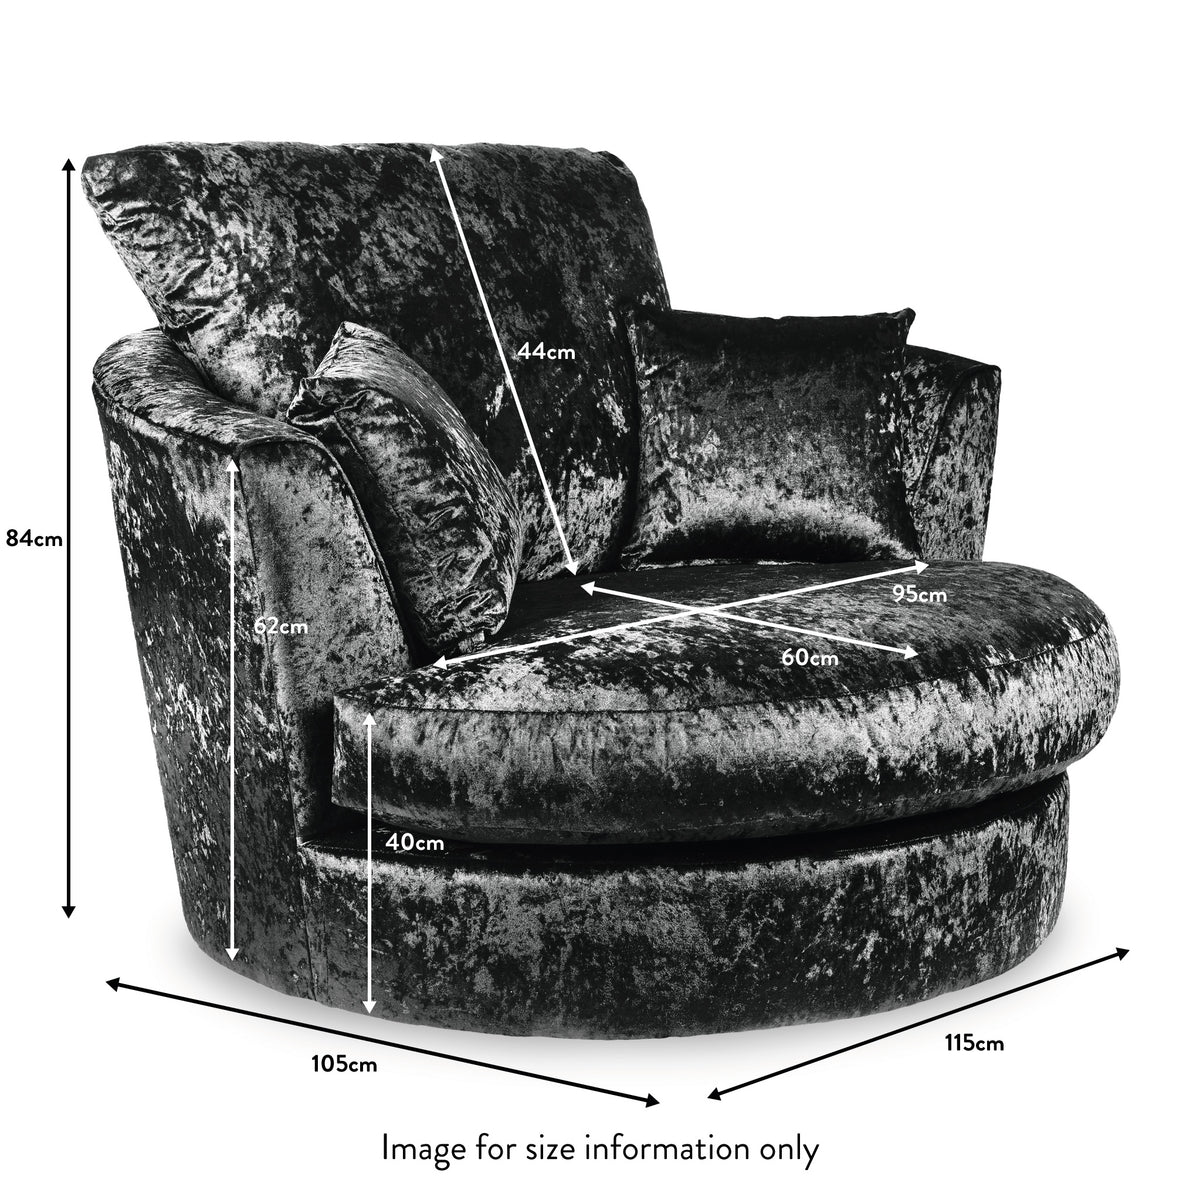 Tamara Black Crushed Velvet Swivel Chair dimensions